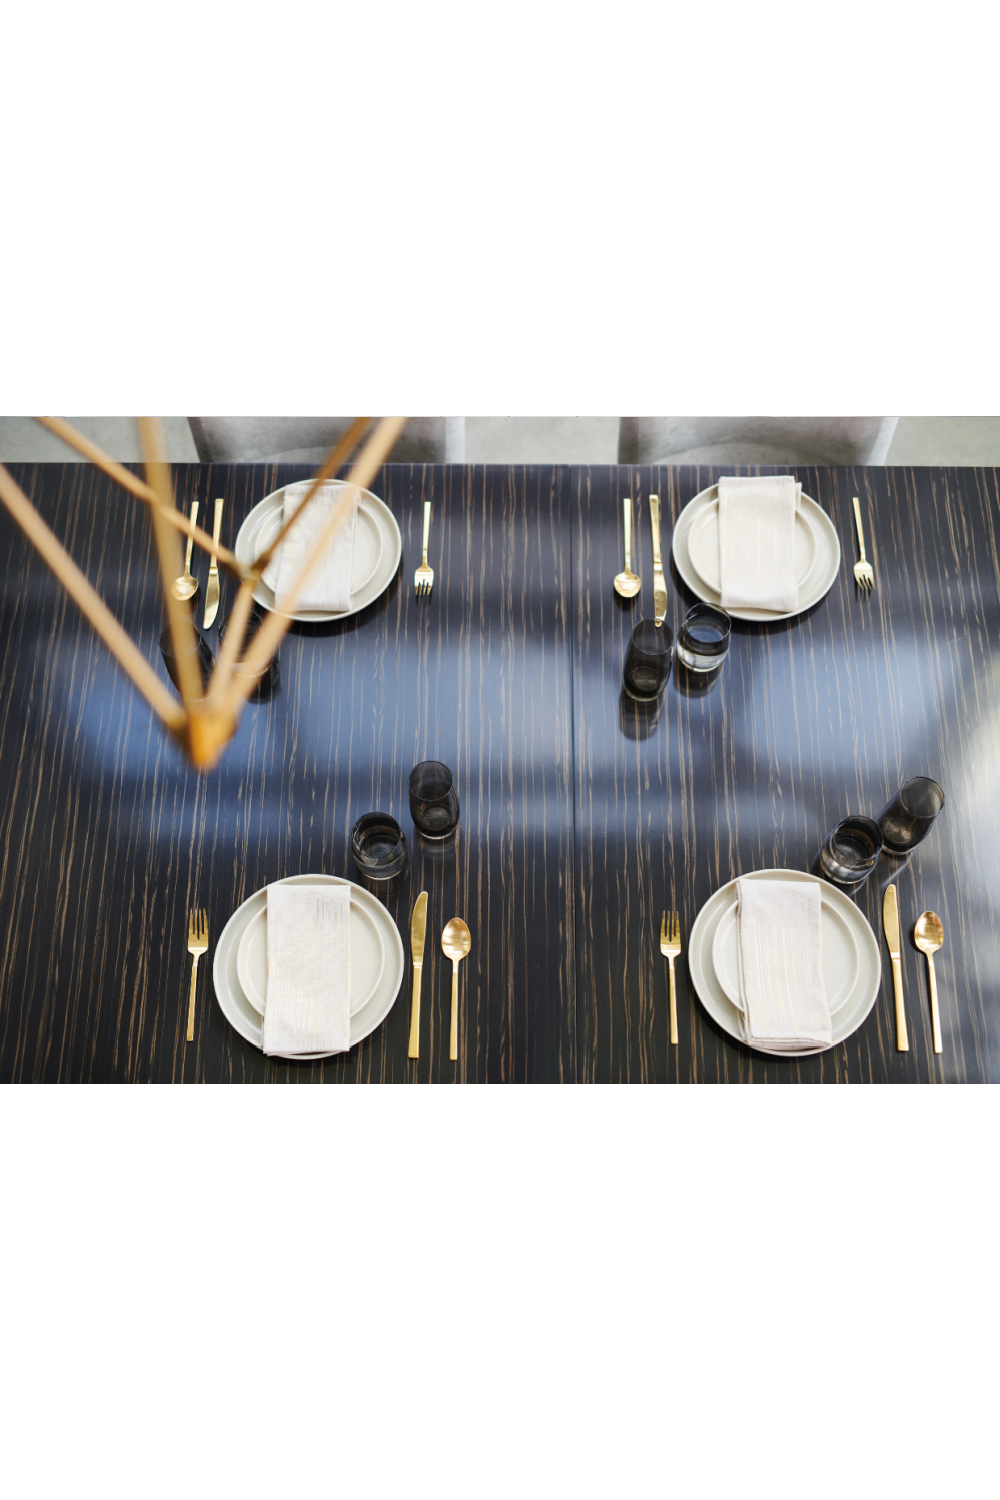 Striated Wood Extendable Dining Table | Caracole Edge | Oroa.com